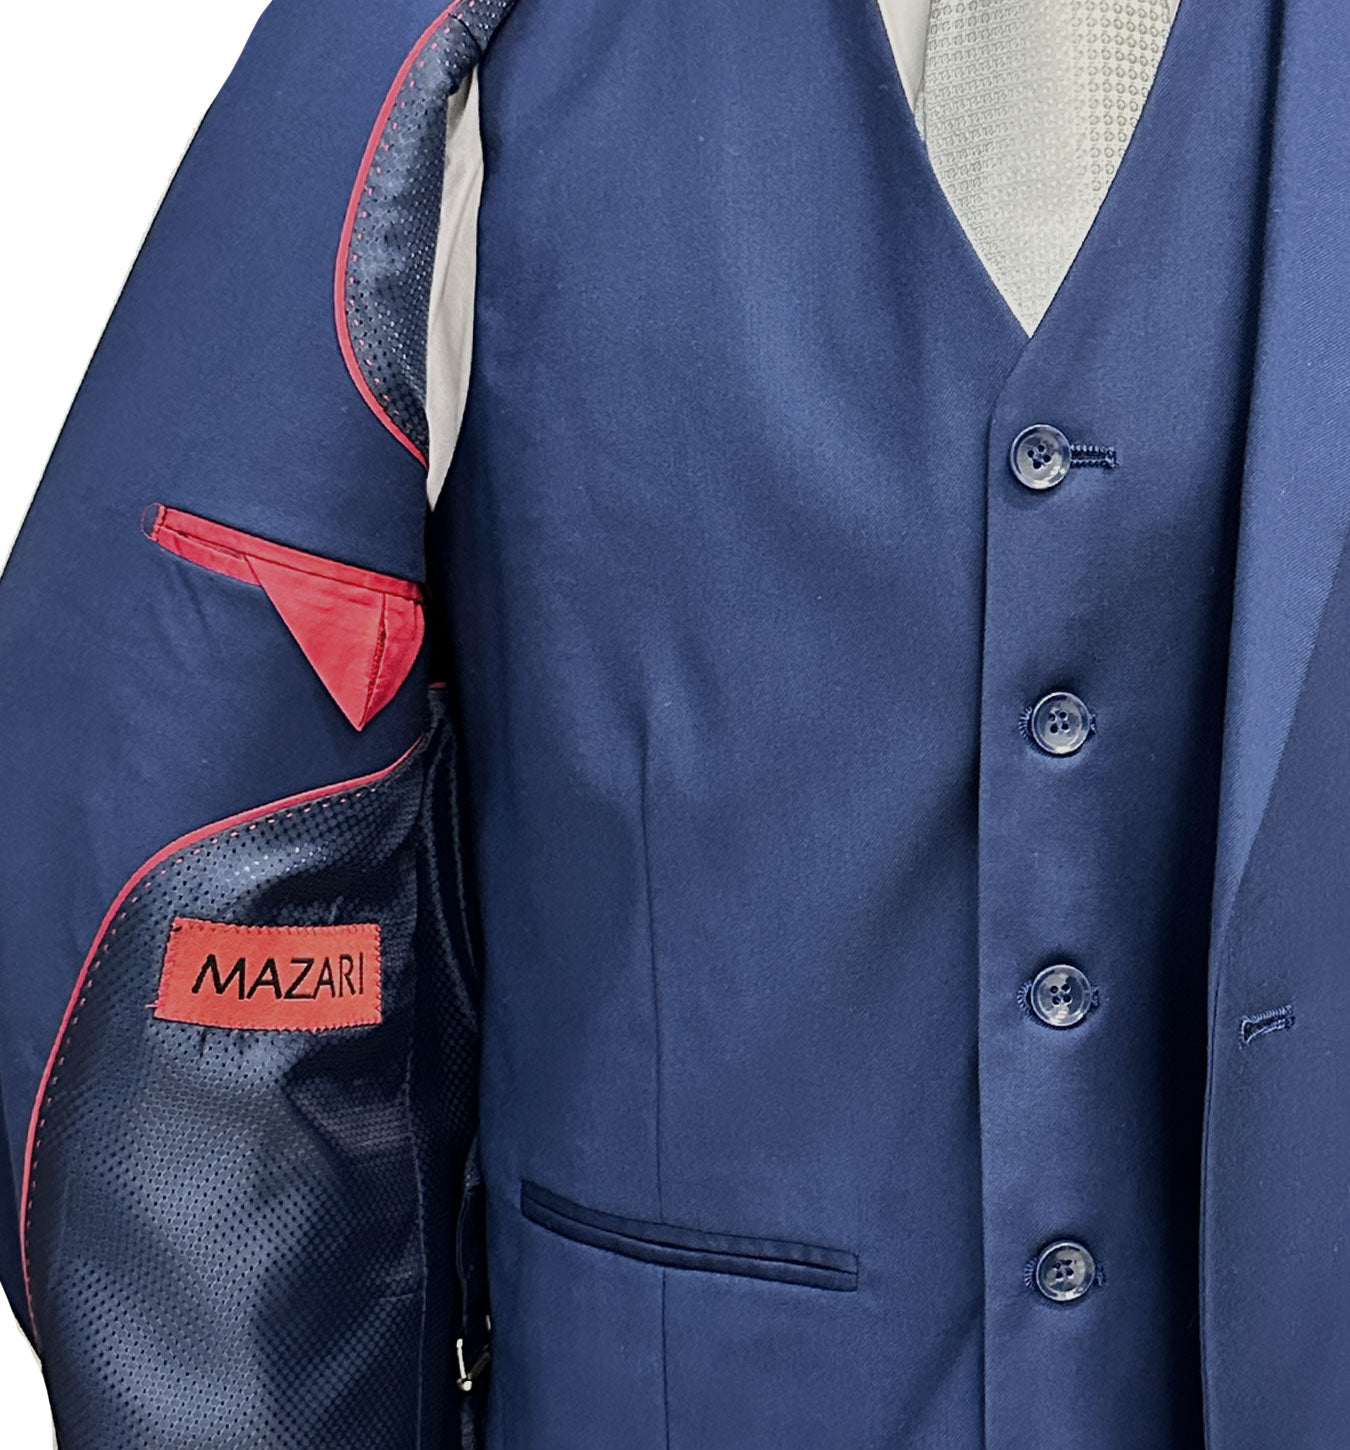 Mazari Vested Blue Modern Menswear MDZ – Paris Suit - Fit 1500